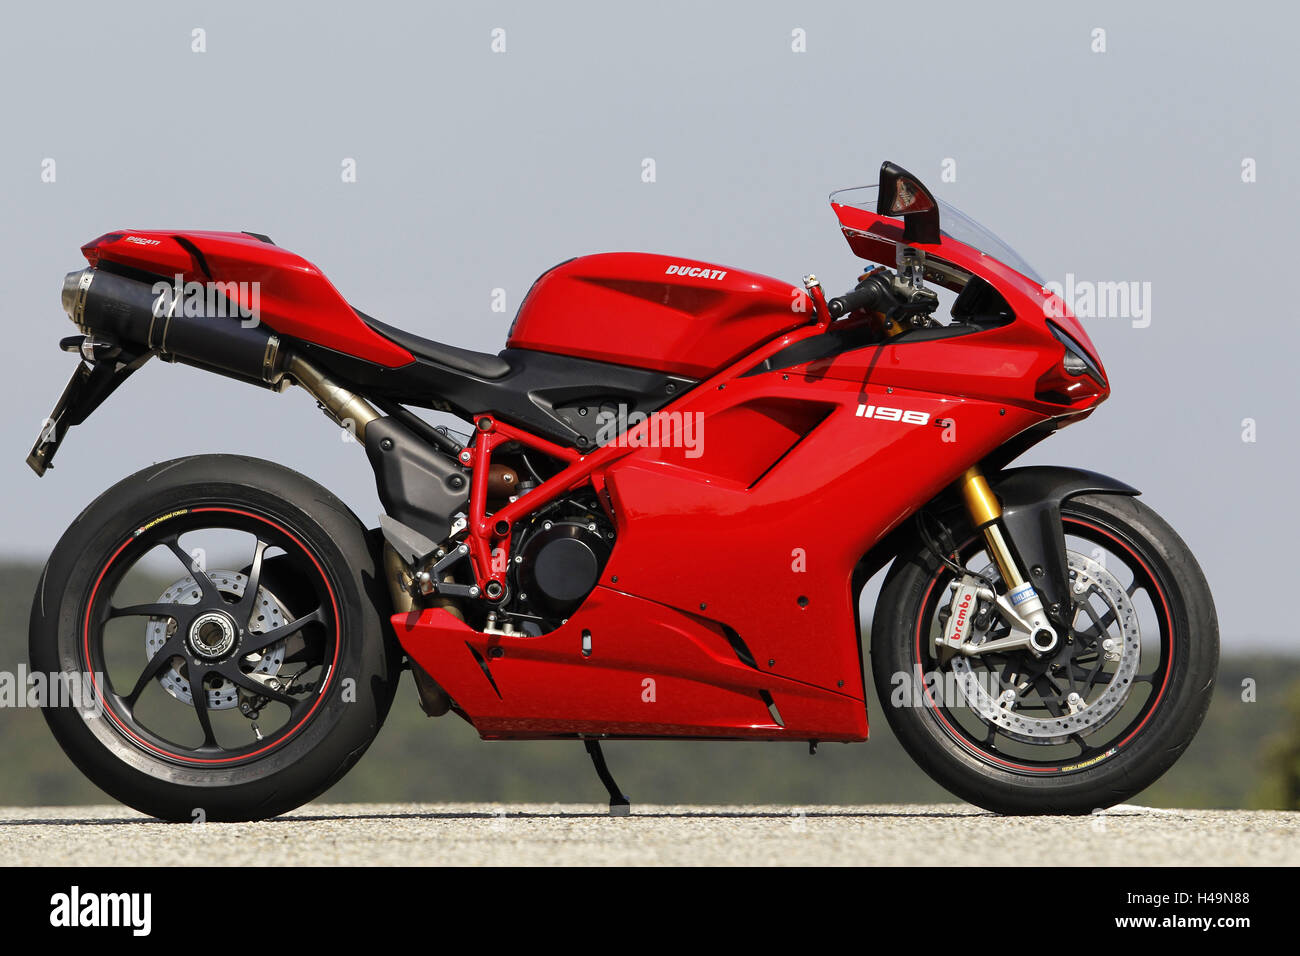 Motorrad, italienische 1000ccm, Ducati 1198 s, Seite standard rechts  Stockfotografie - Alamy